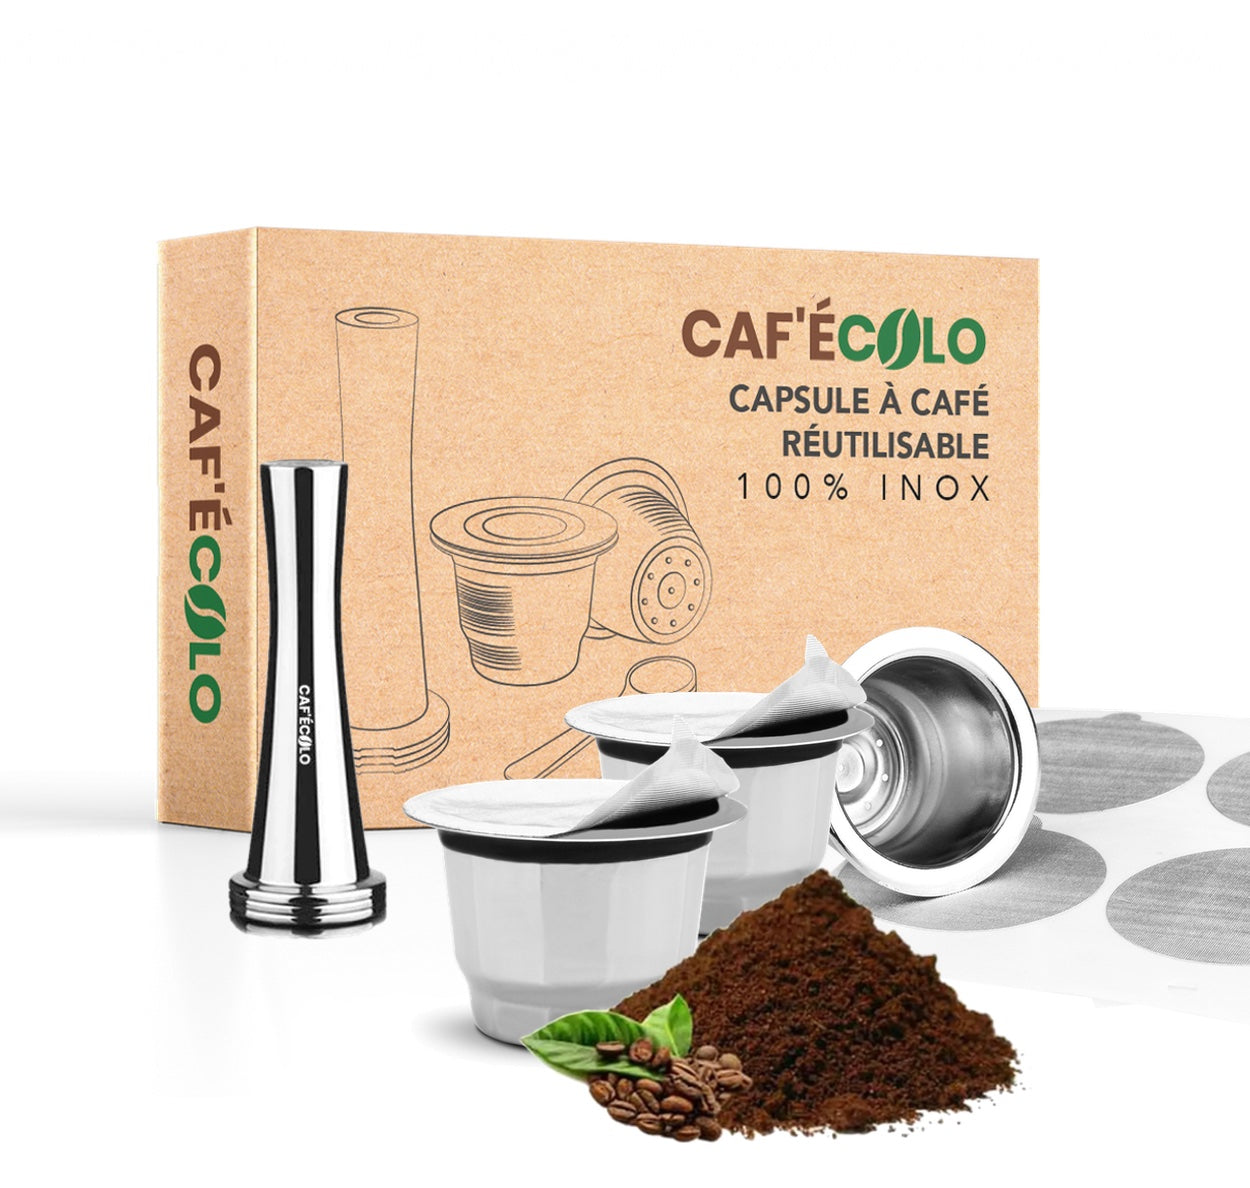 Capsule réutilisable nespresso Cafecolo™ 100% inox – Caf'écolo